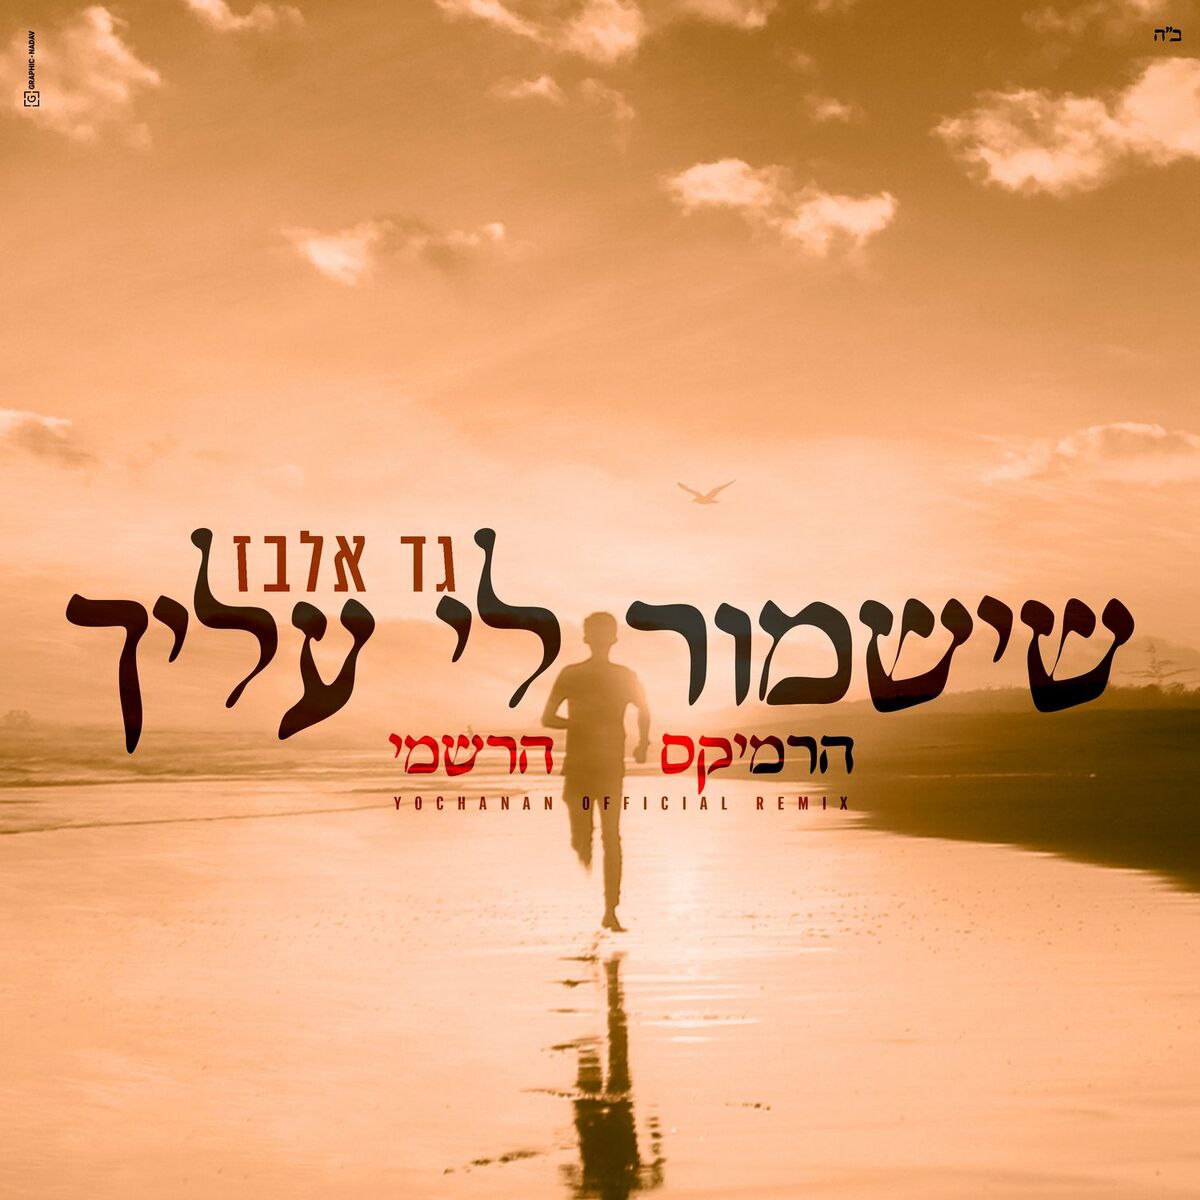 Gad Elbaz, Prod. By Yochanan - Sheyishmor [Official Remix] (Single)